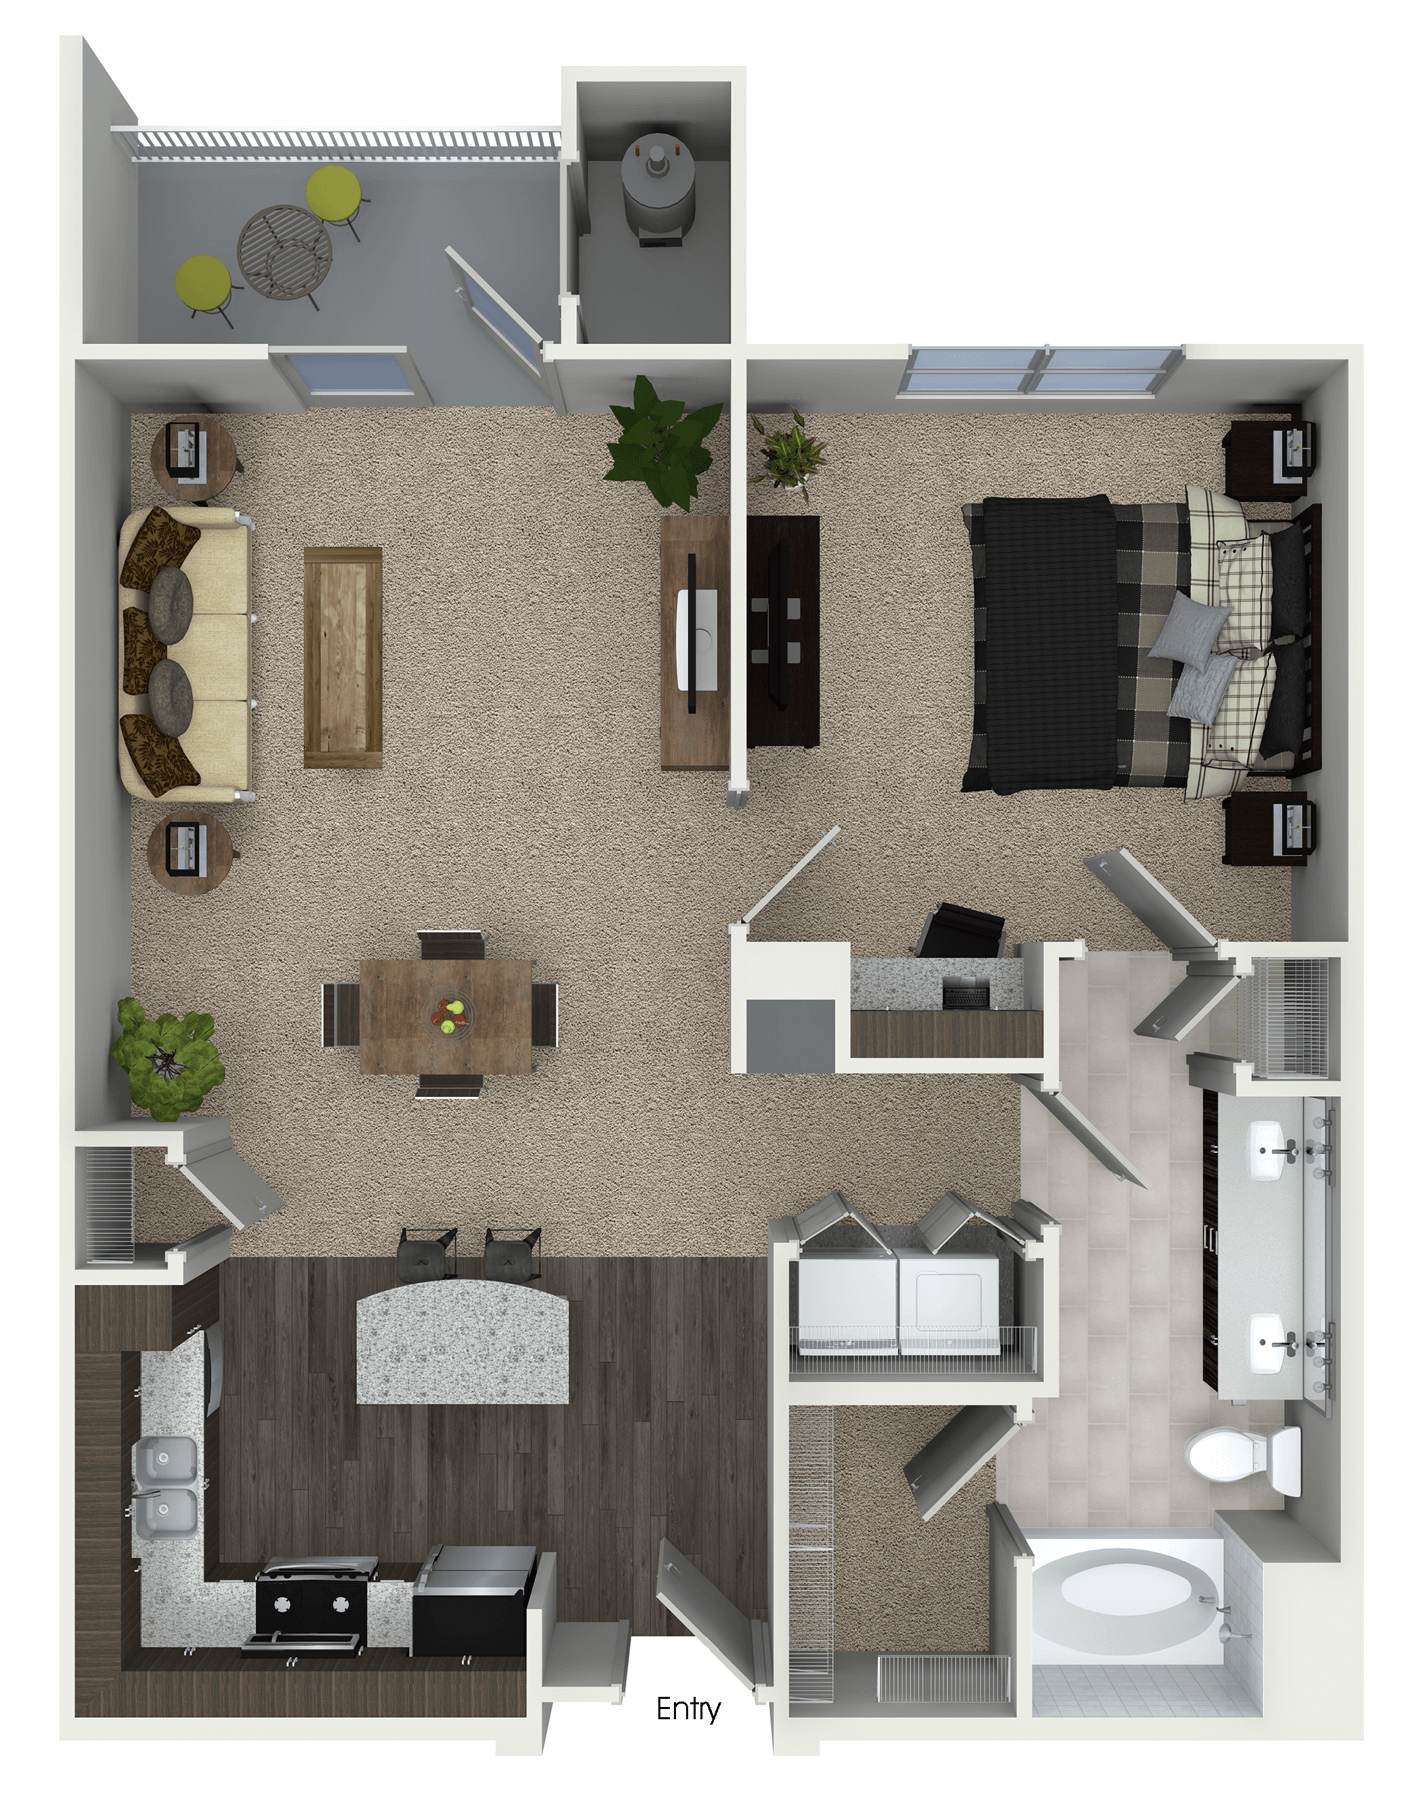 Floorplan for Apartment #3406, 1 bedroom unit at Halstead Marlborough